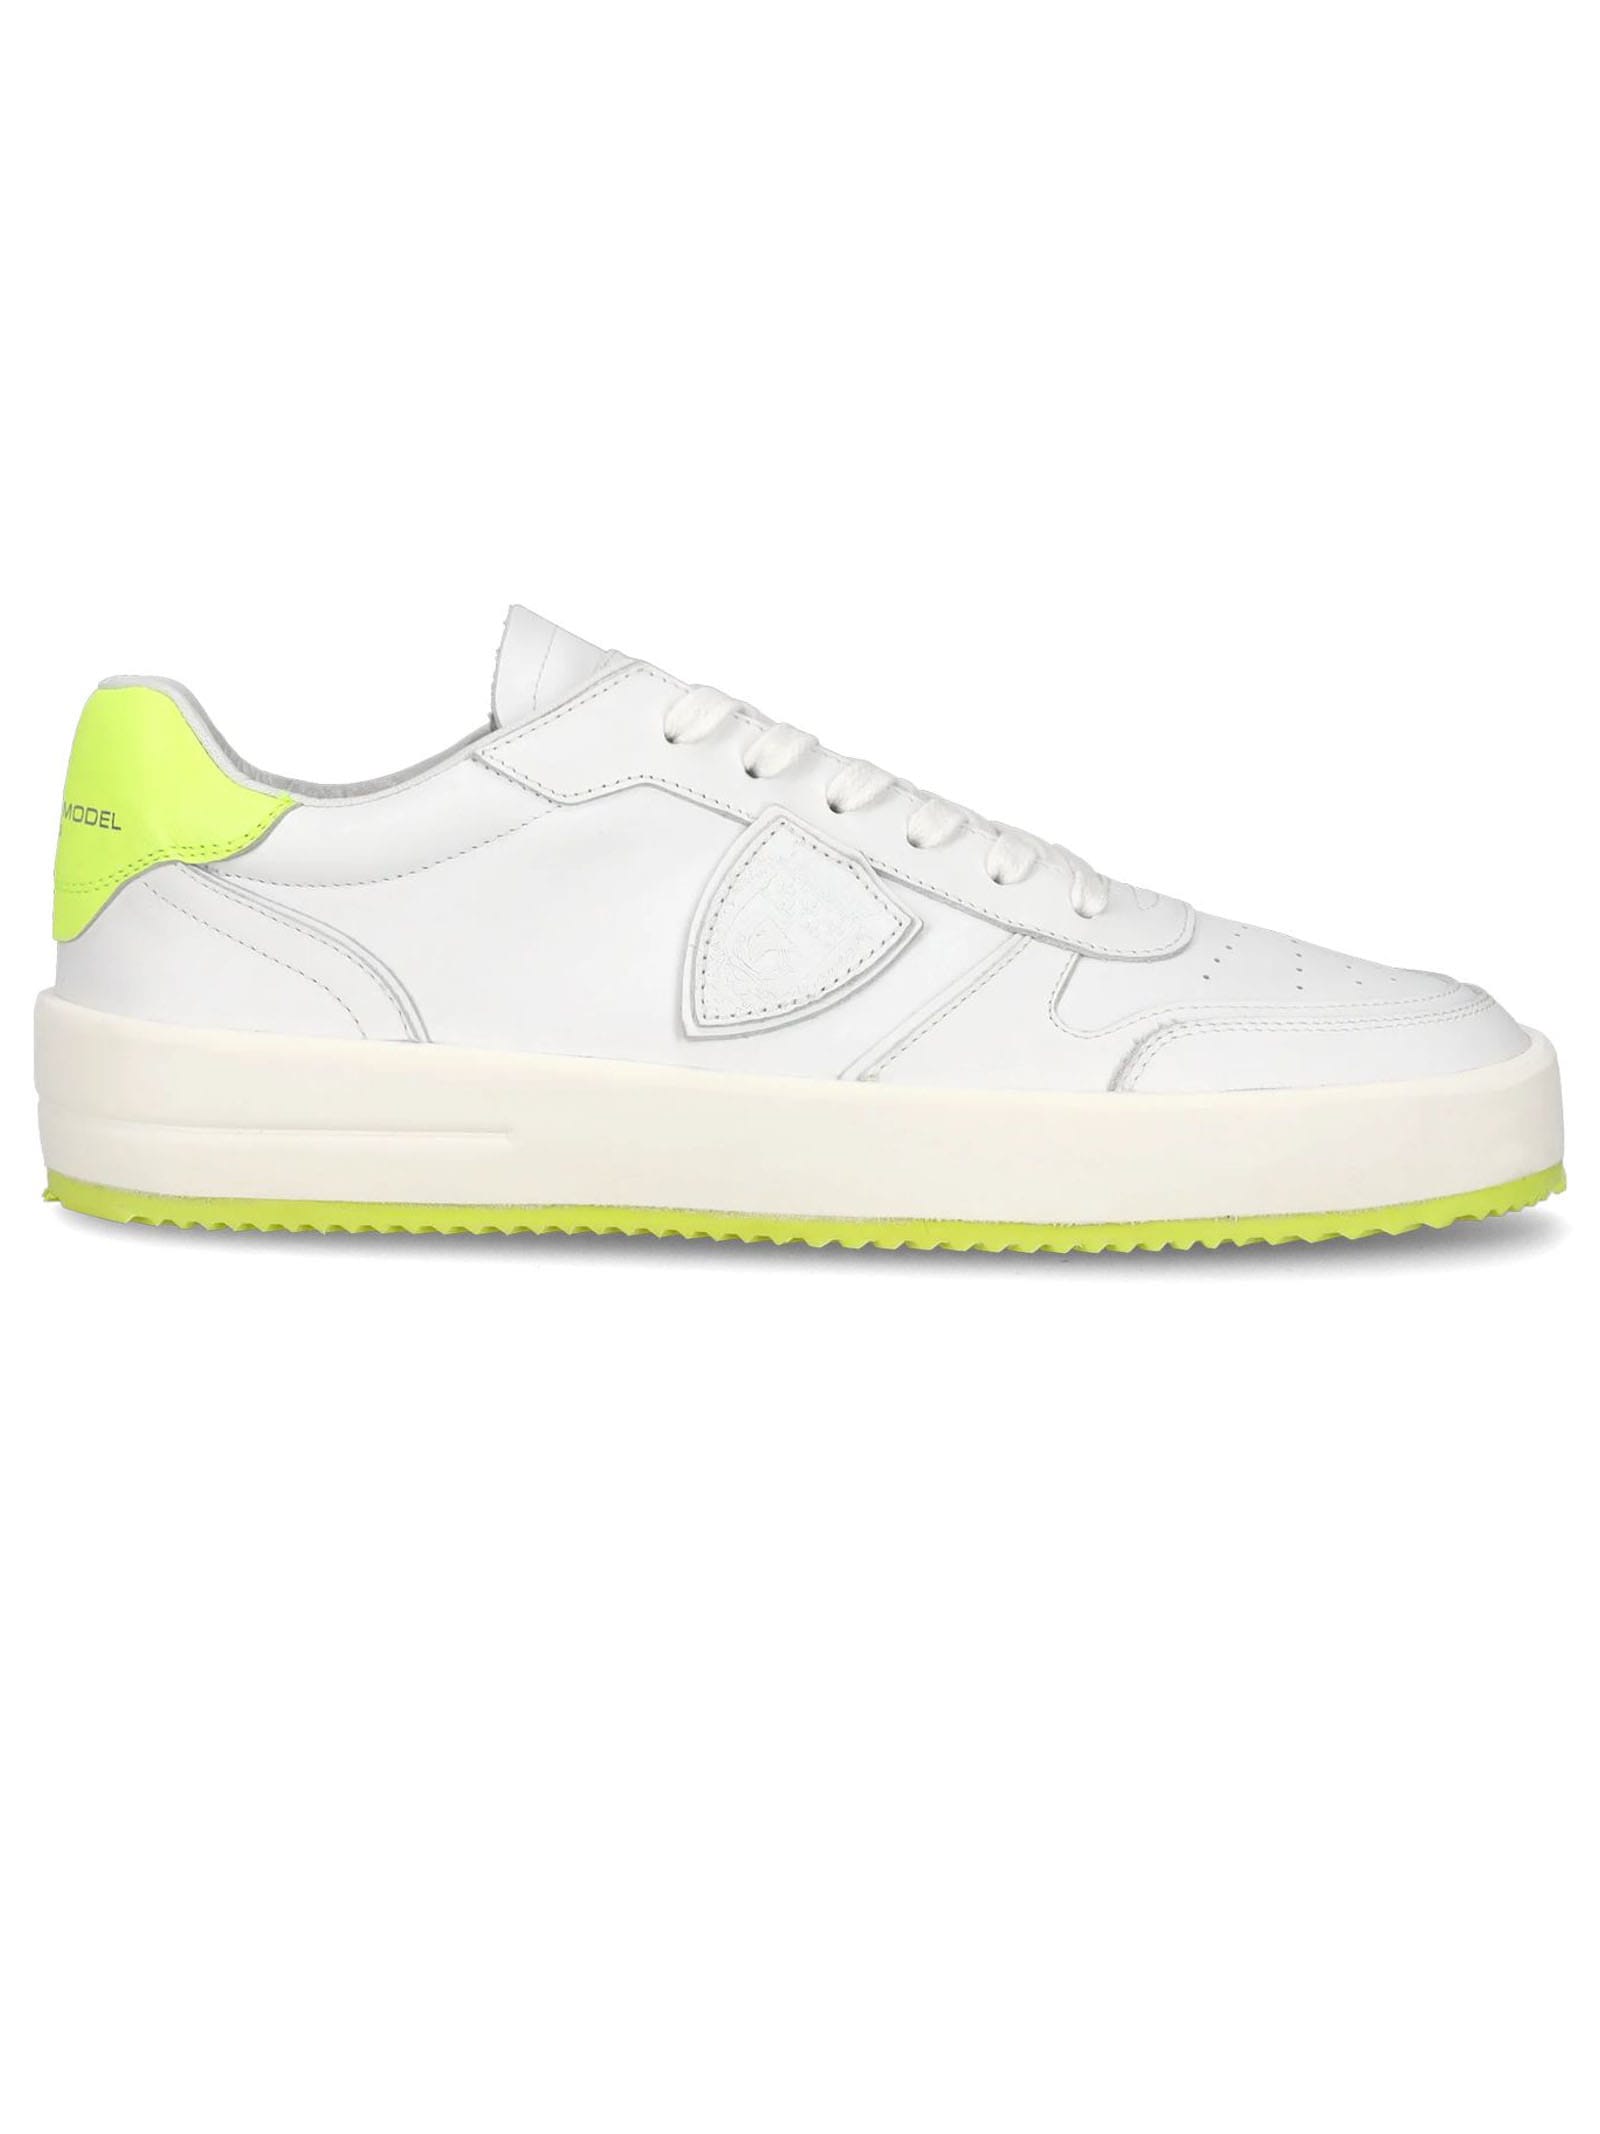 Nice Sneaker White And Neon Yellow